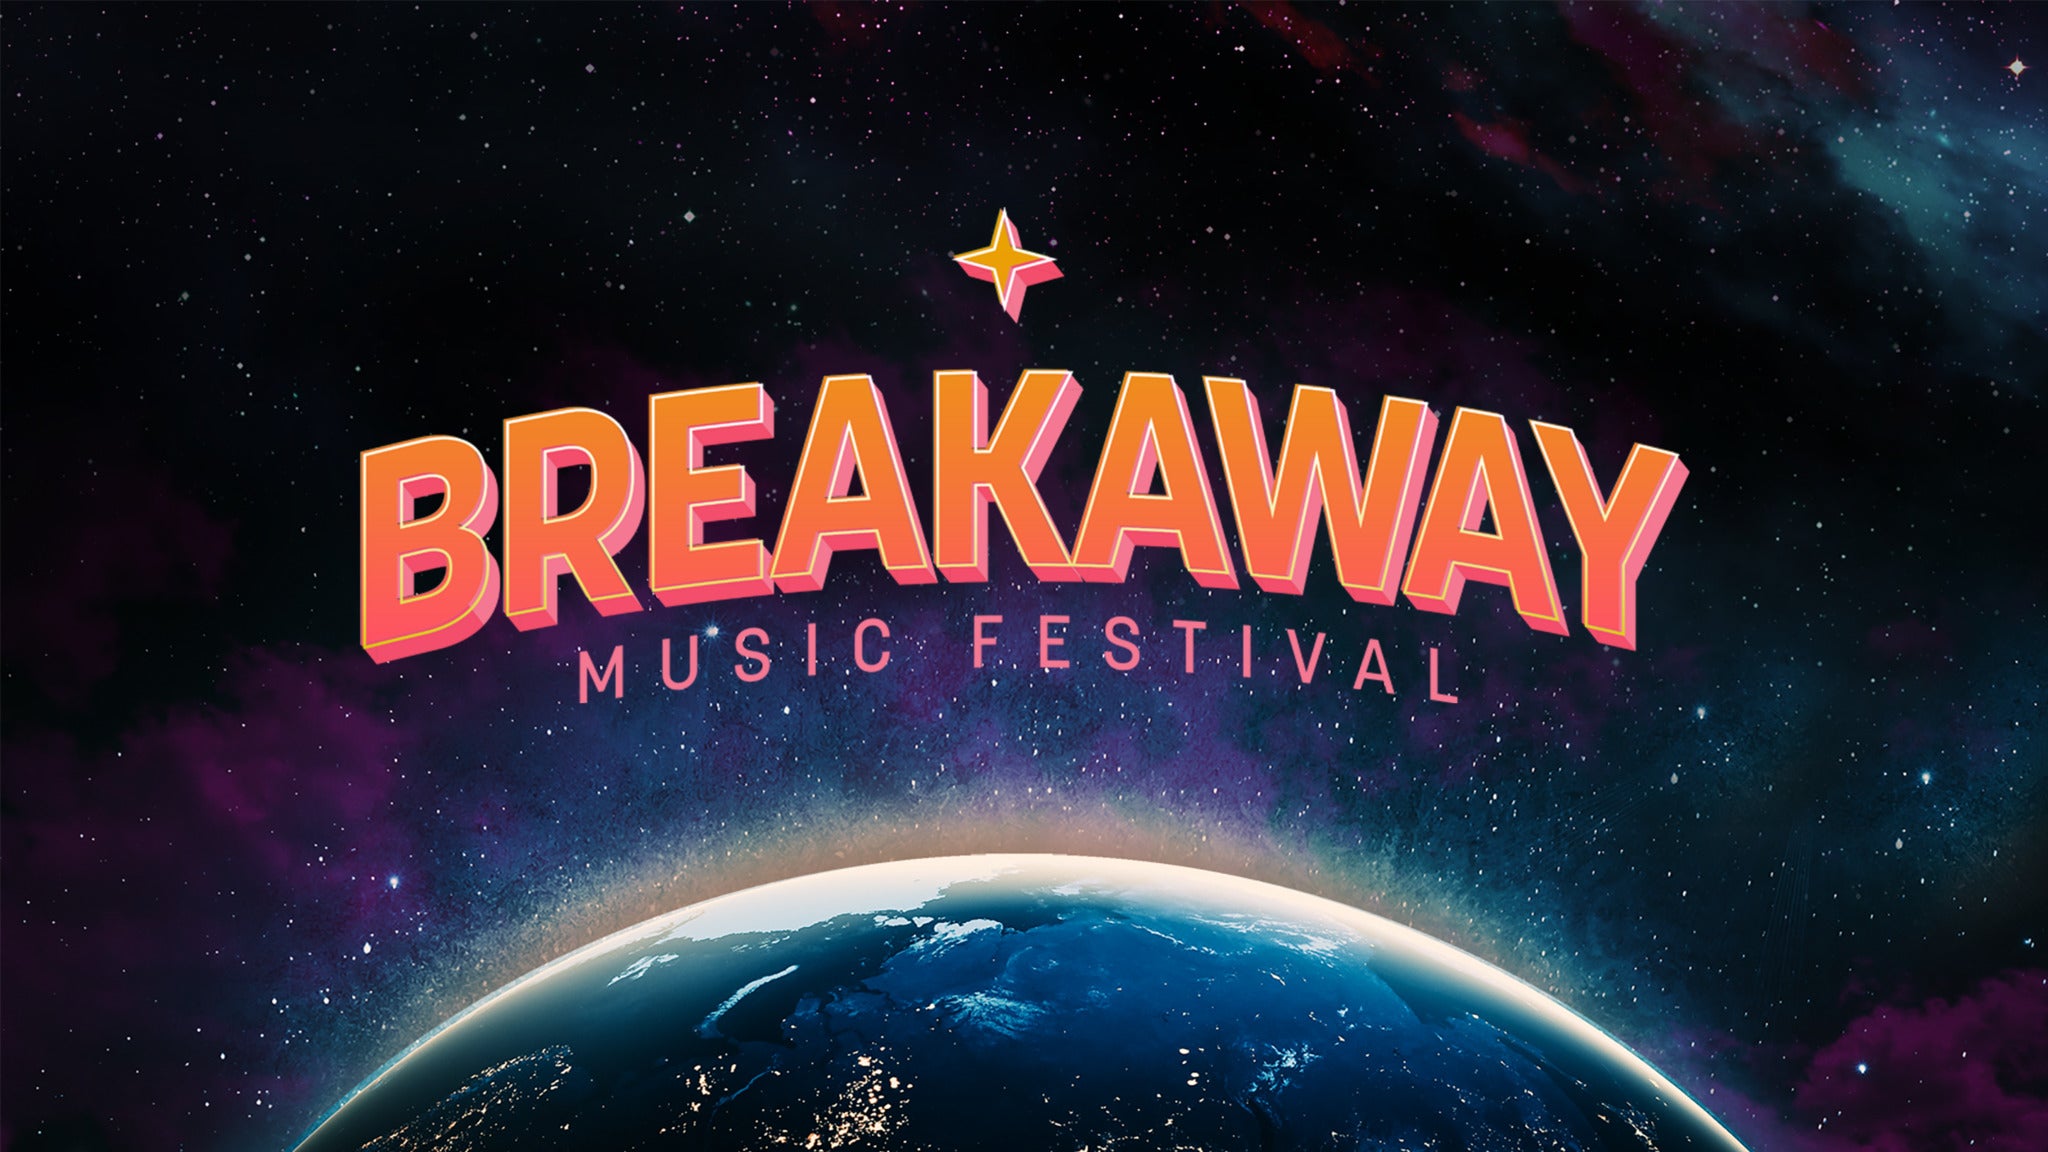 Breakaway Music Festival Nashville Tickets, 2022 Concert Tour Dates